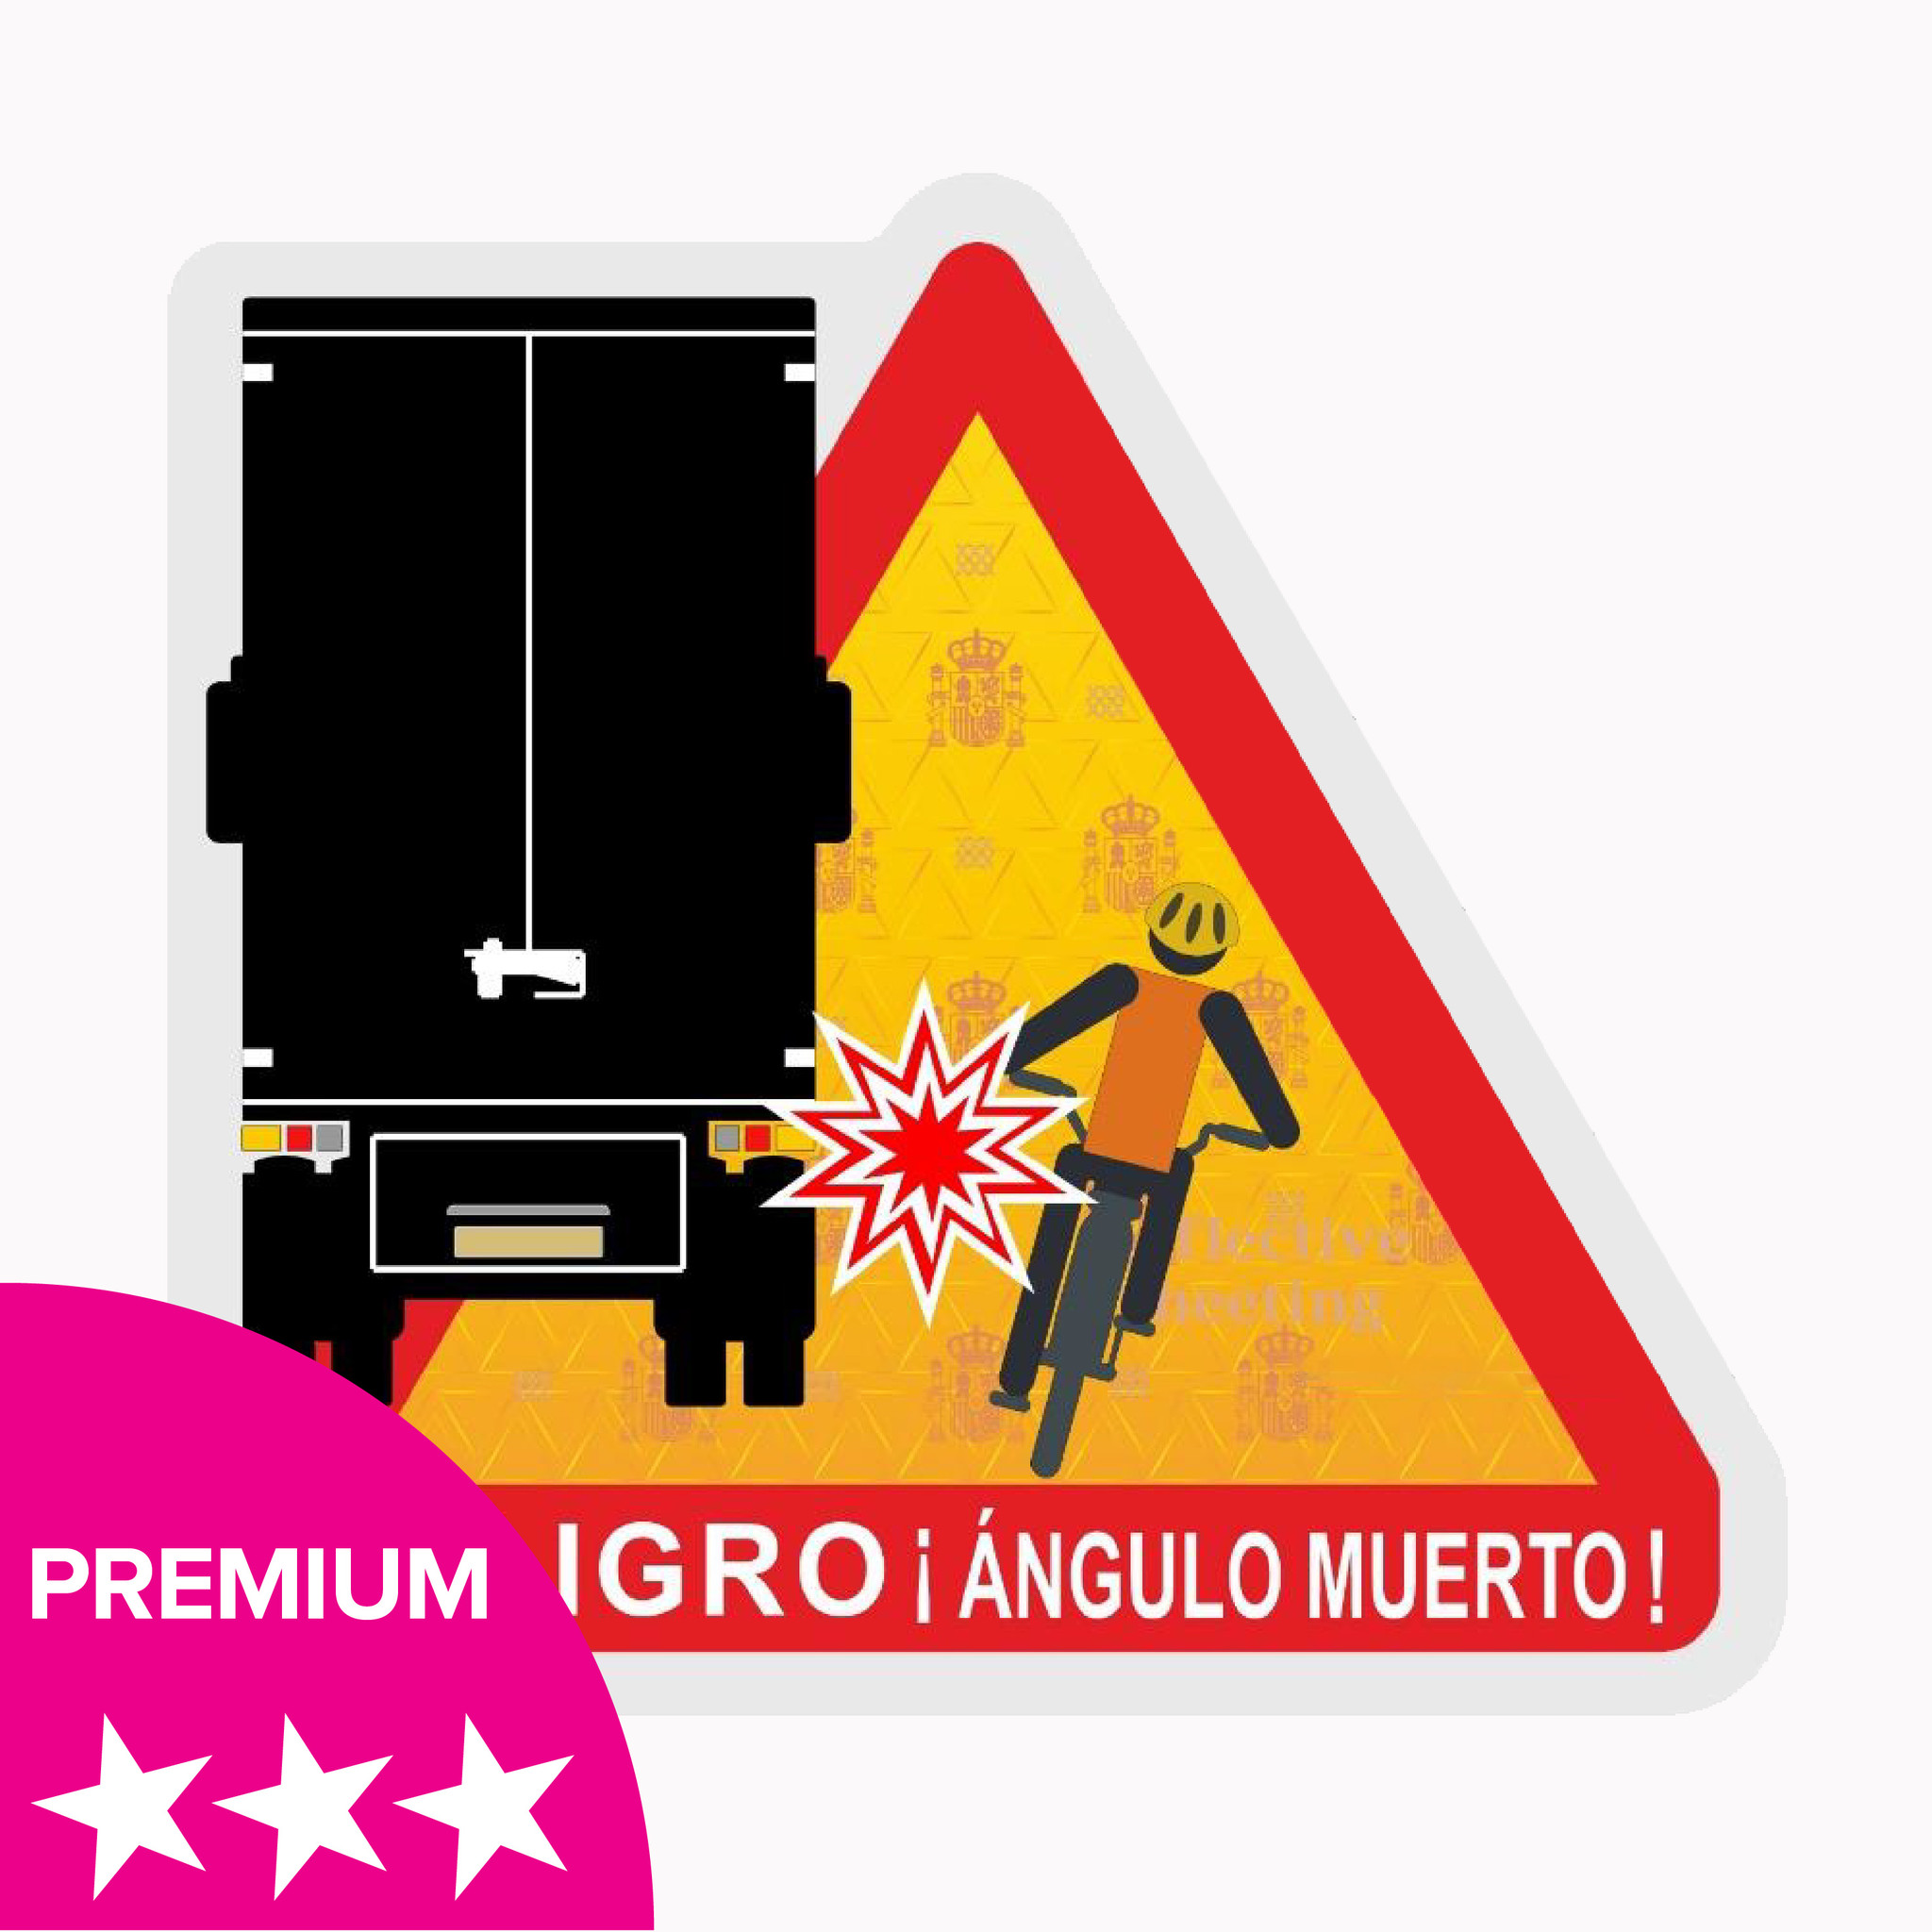 Angle mort - Autocollant Peligro ángulos muertos Truck Spain - PREMIUM